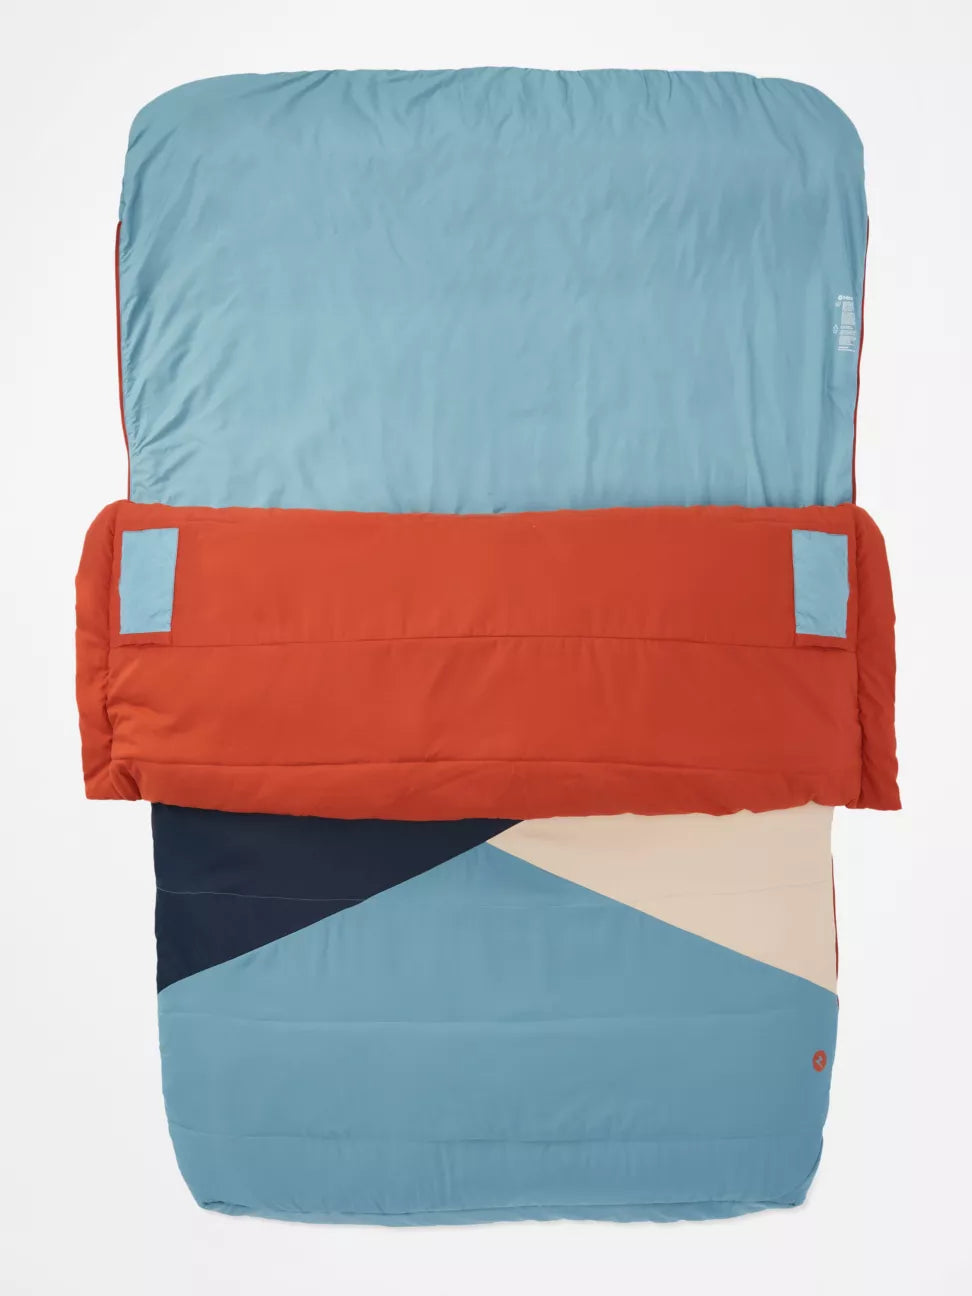 Idlewild 30° Doublewide Sleeping Bag Big Adventure Outfitters